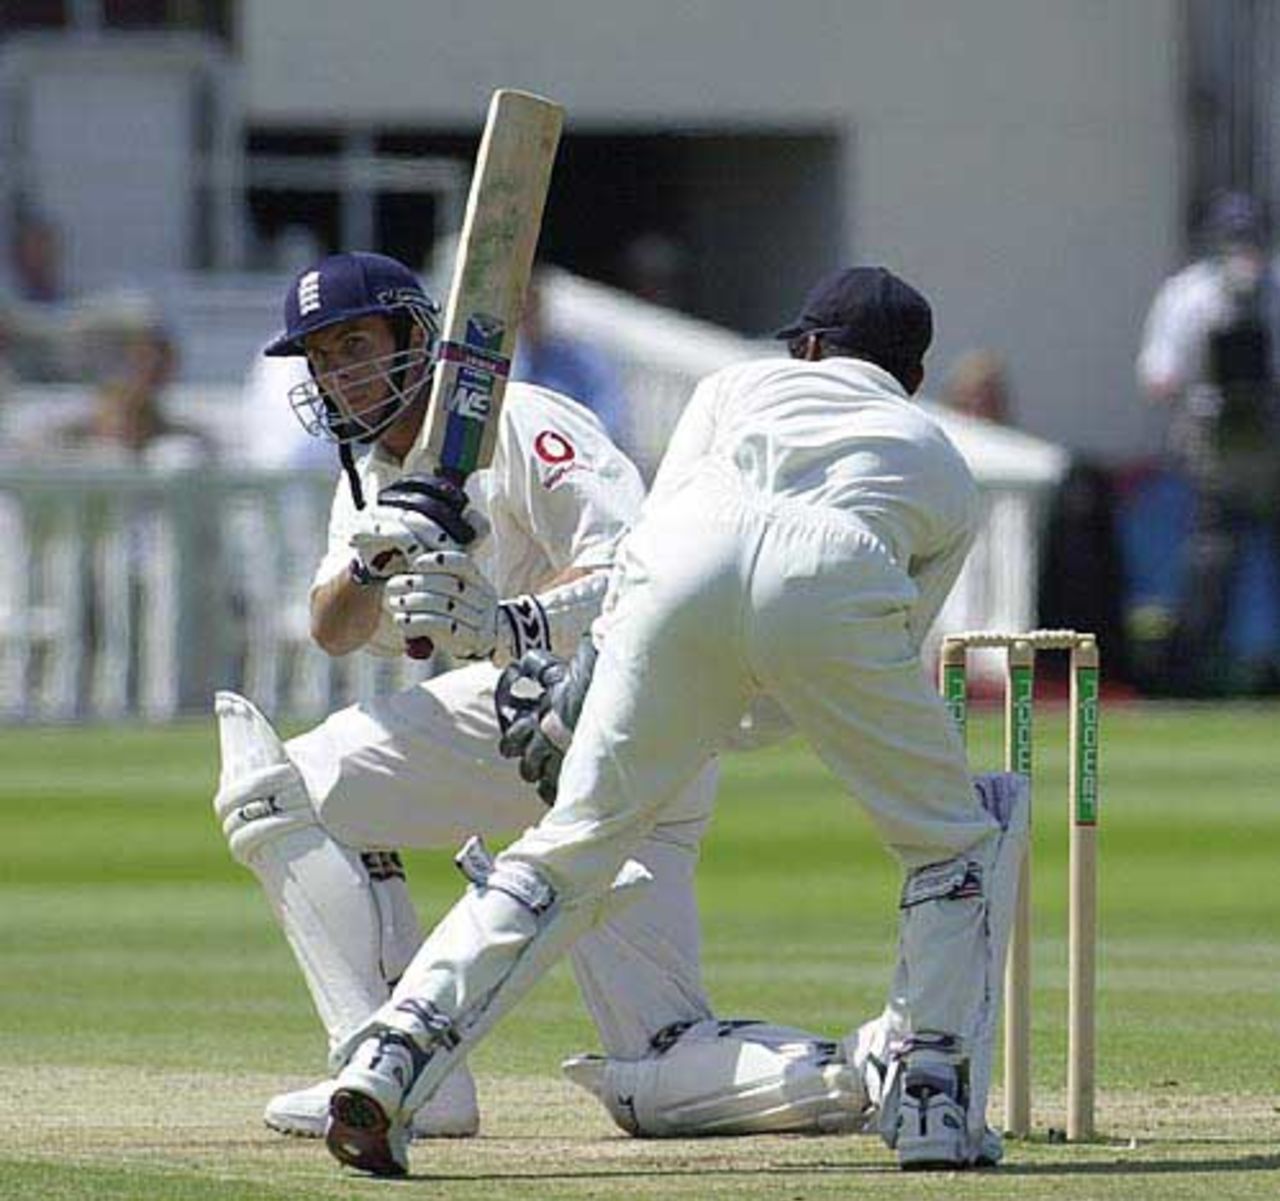 Michael Vaughan with a sweep to leg off the bowling of Jayasuriya, England v Sri Lanka, First Test, Lord's 2002